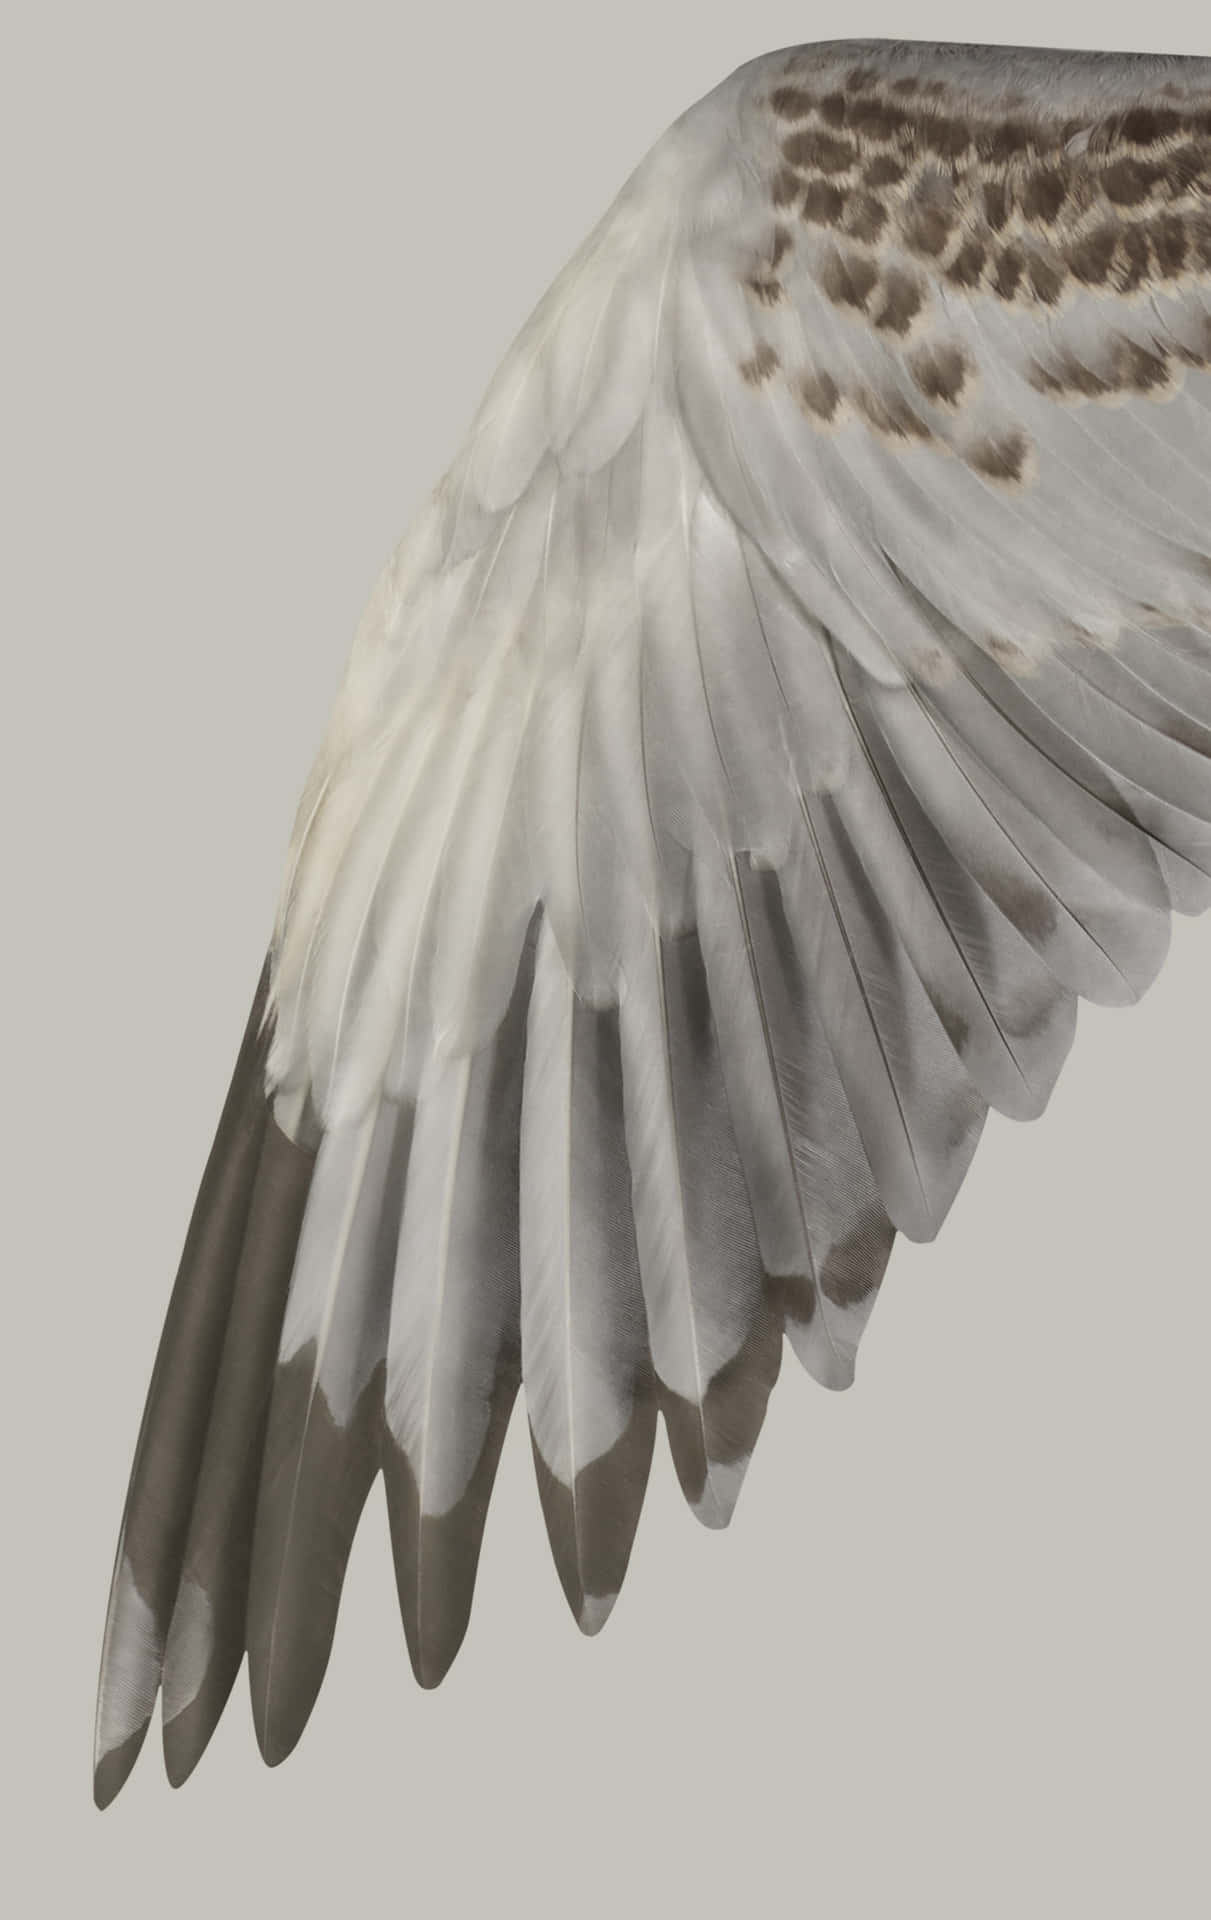 Bird Wing Feathers Detail.jpg Wallpaper